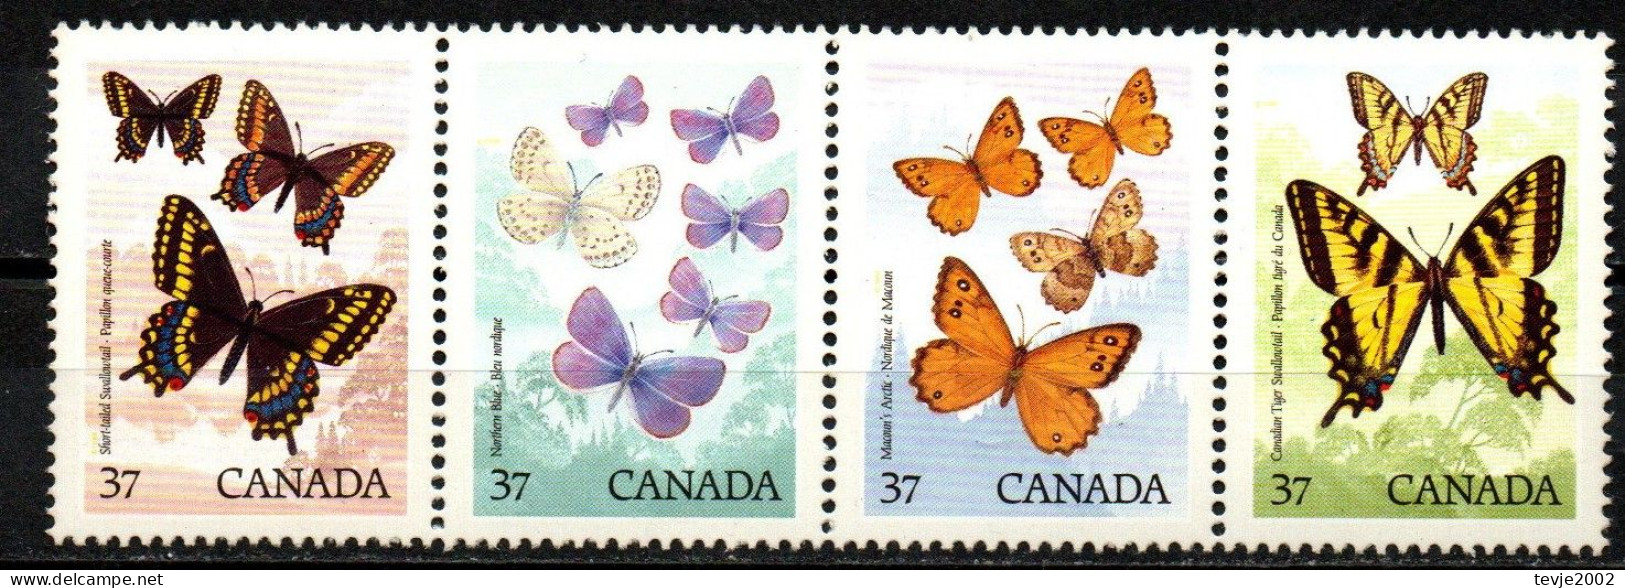 Kanada Canada 1988 - Mi.Nr. 1090 - 1093 - Postfrisch MNH - Tiere Animals Schmetterlinge Butterflies - Butterflies